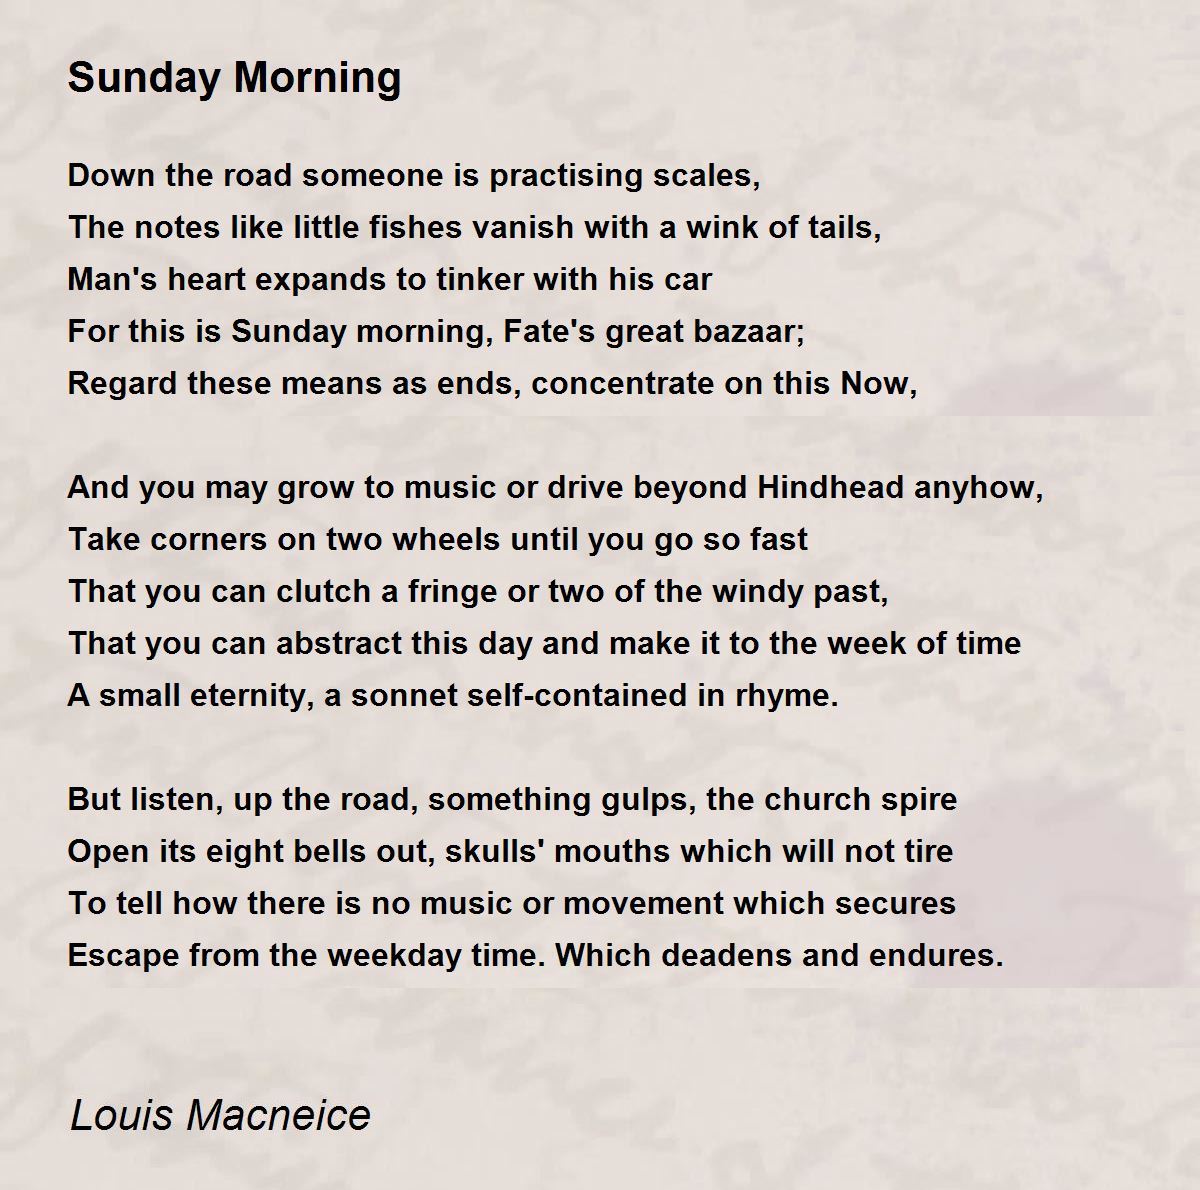 Sunday Morning - Sunday Morning Poem by Louis Macneice